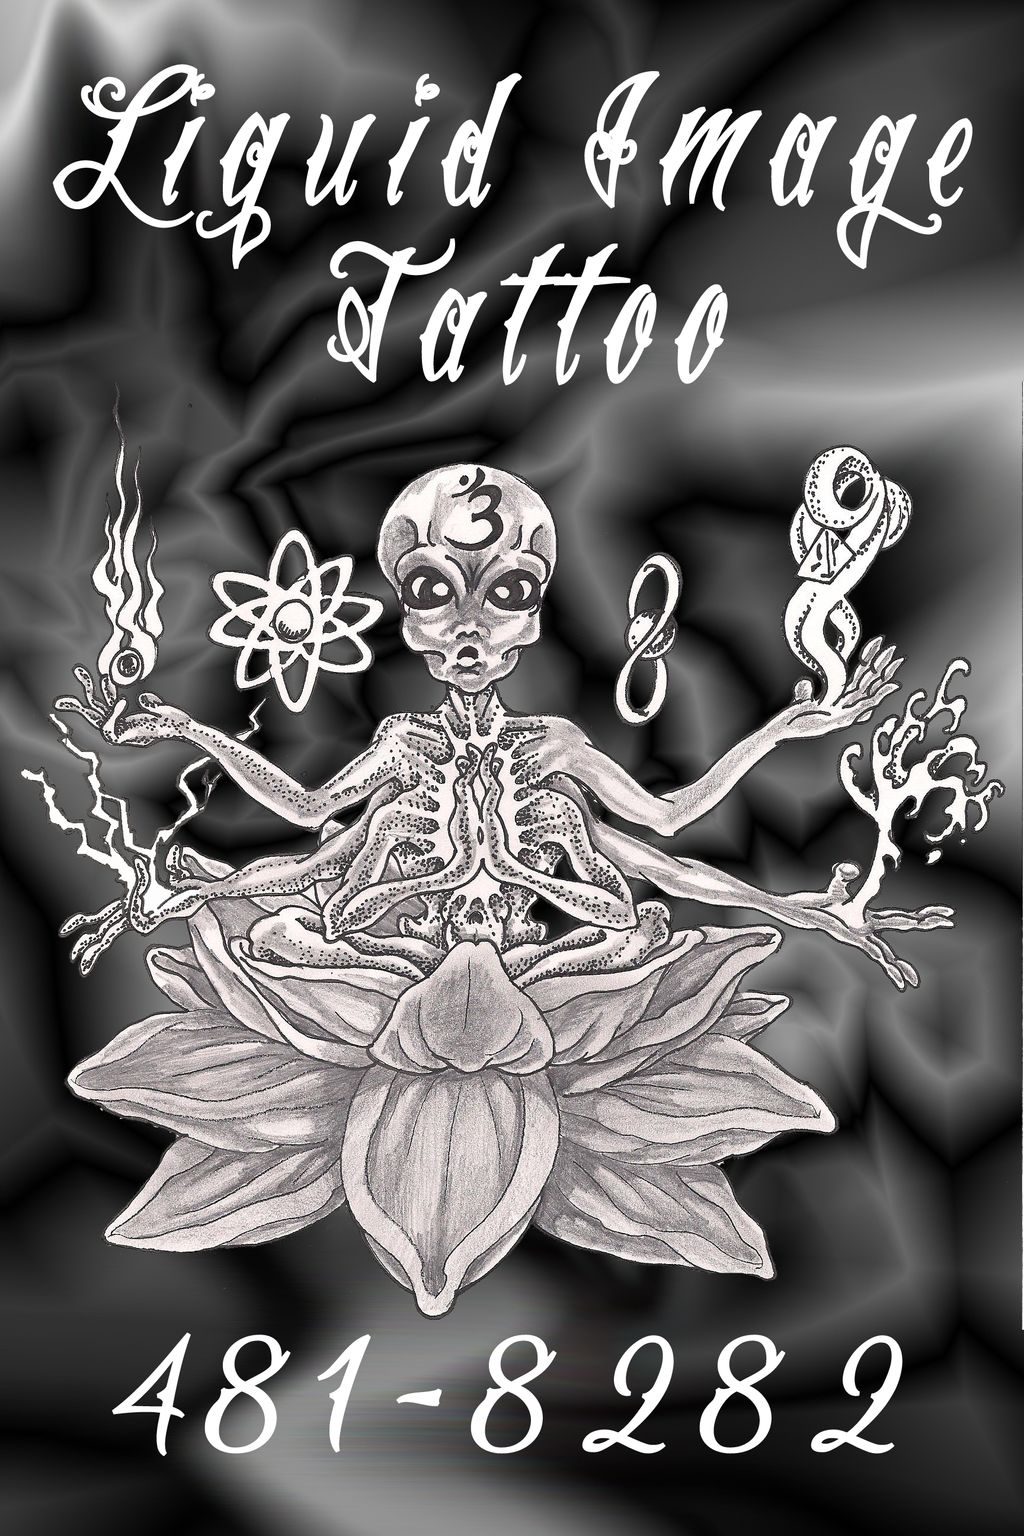 Liquid Image Tattoo, Inc.